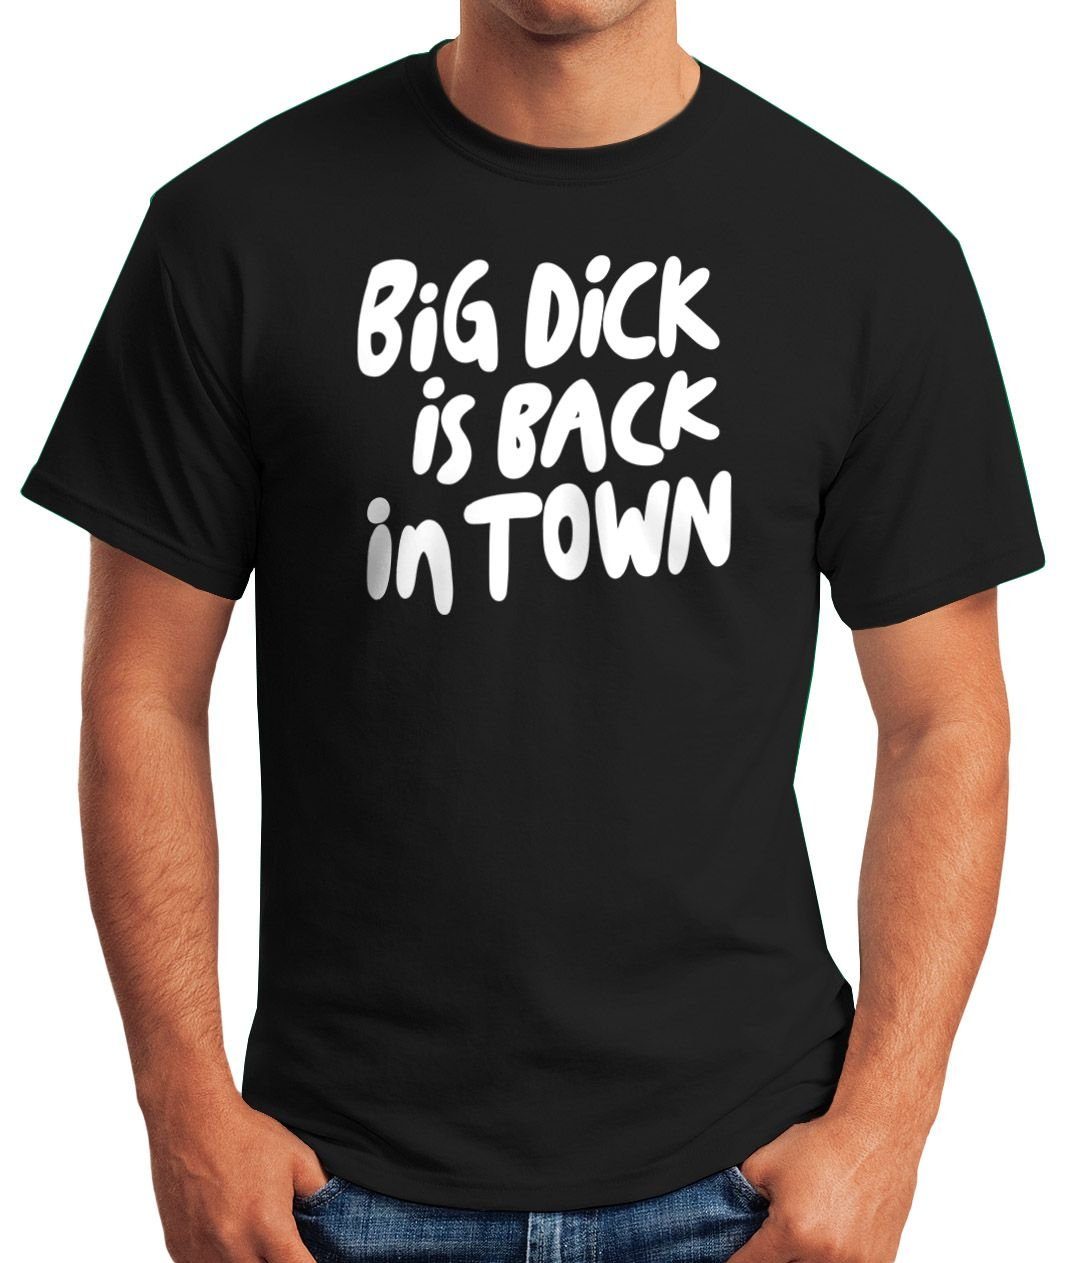 MoonWorks Print-Shirt Herren mit Ironie in mit Print Moonworks® Fun-Shirt Spruch schwarz back Big lustig T-Shirt Town is Dick